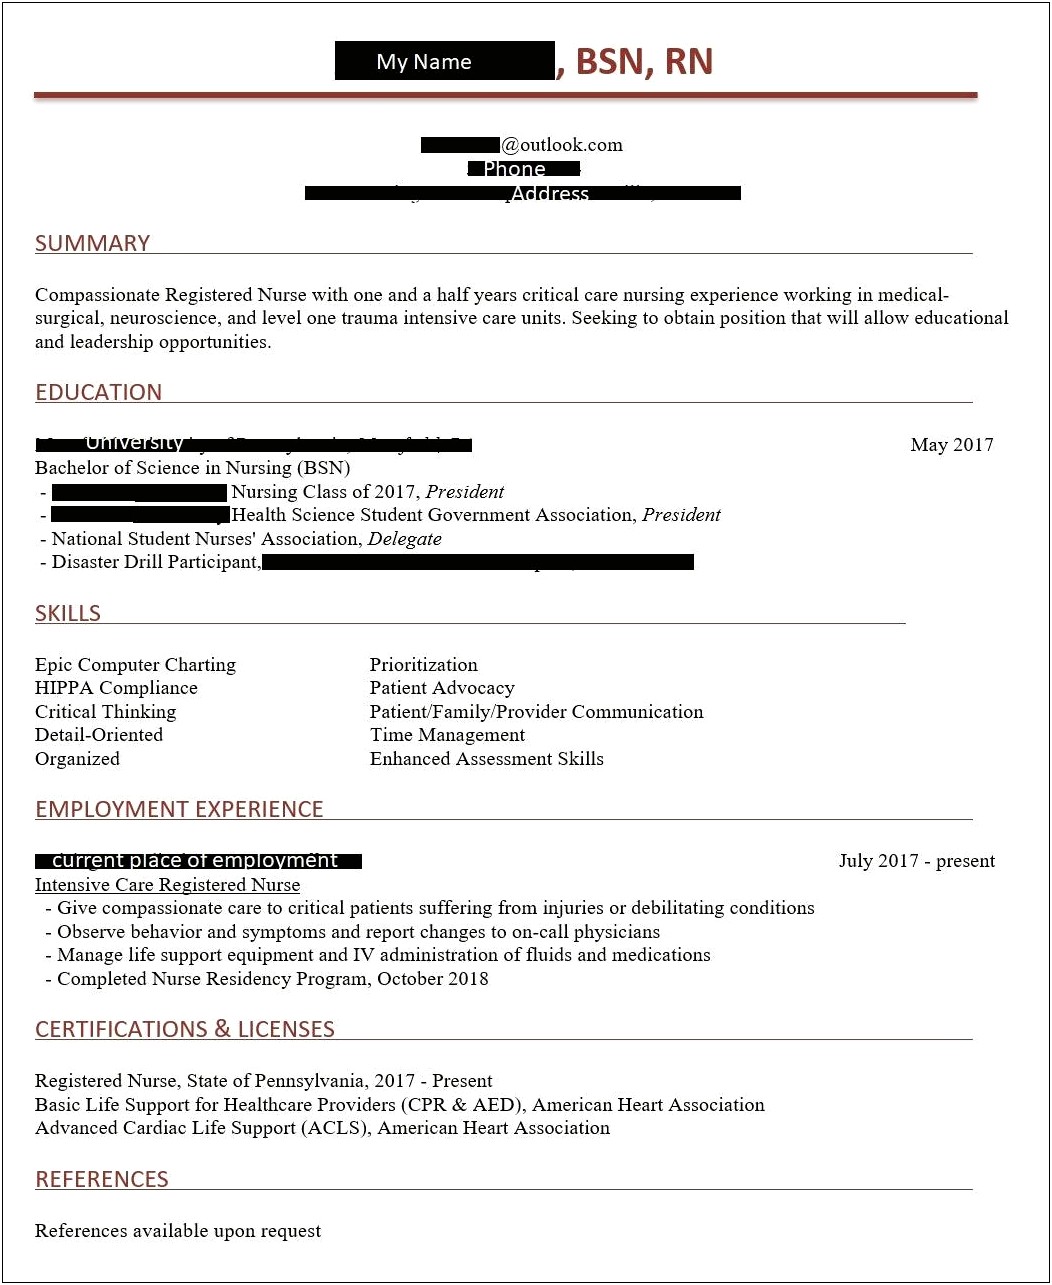 Resume Summary For New Graduate Nurse